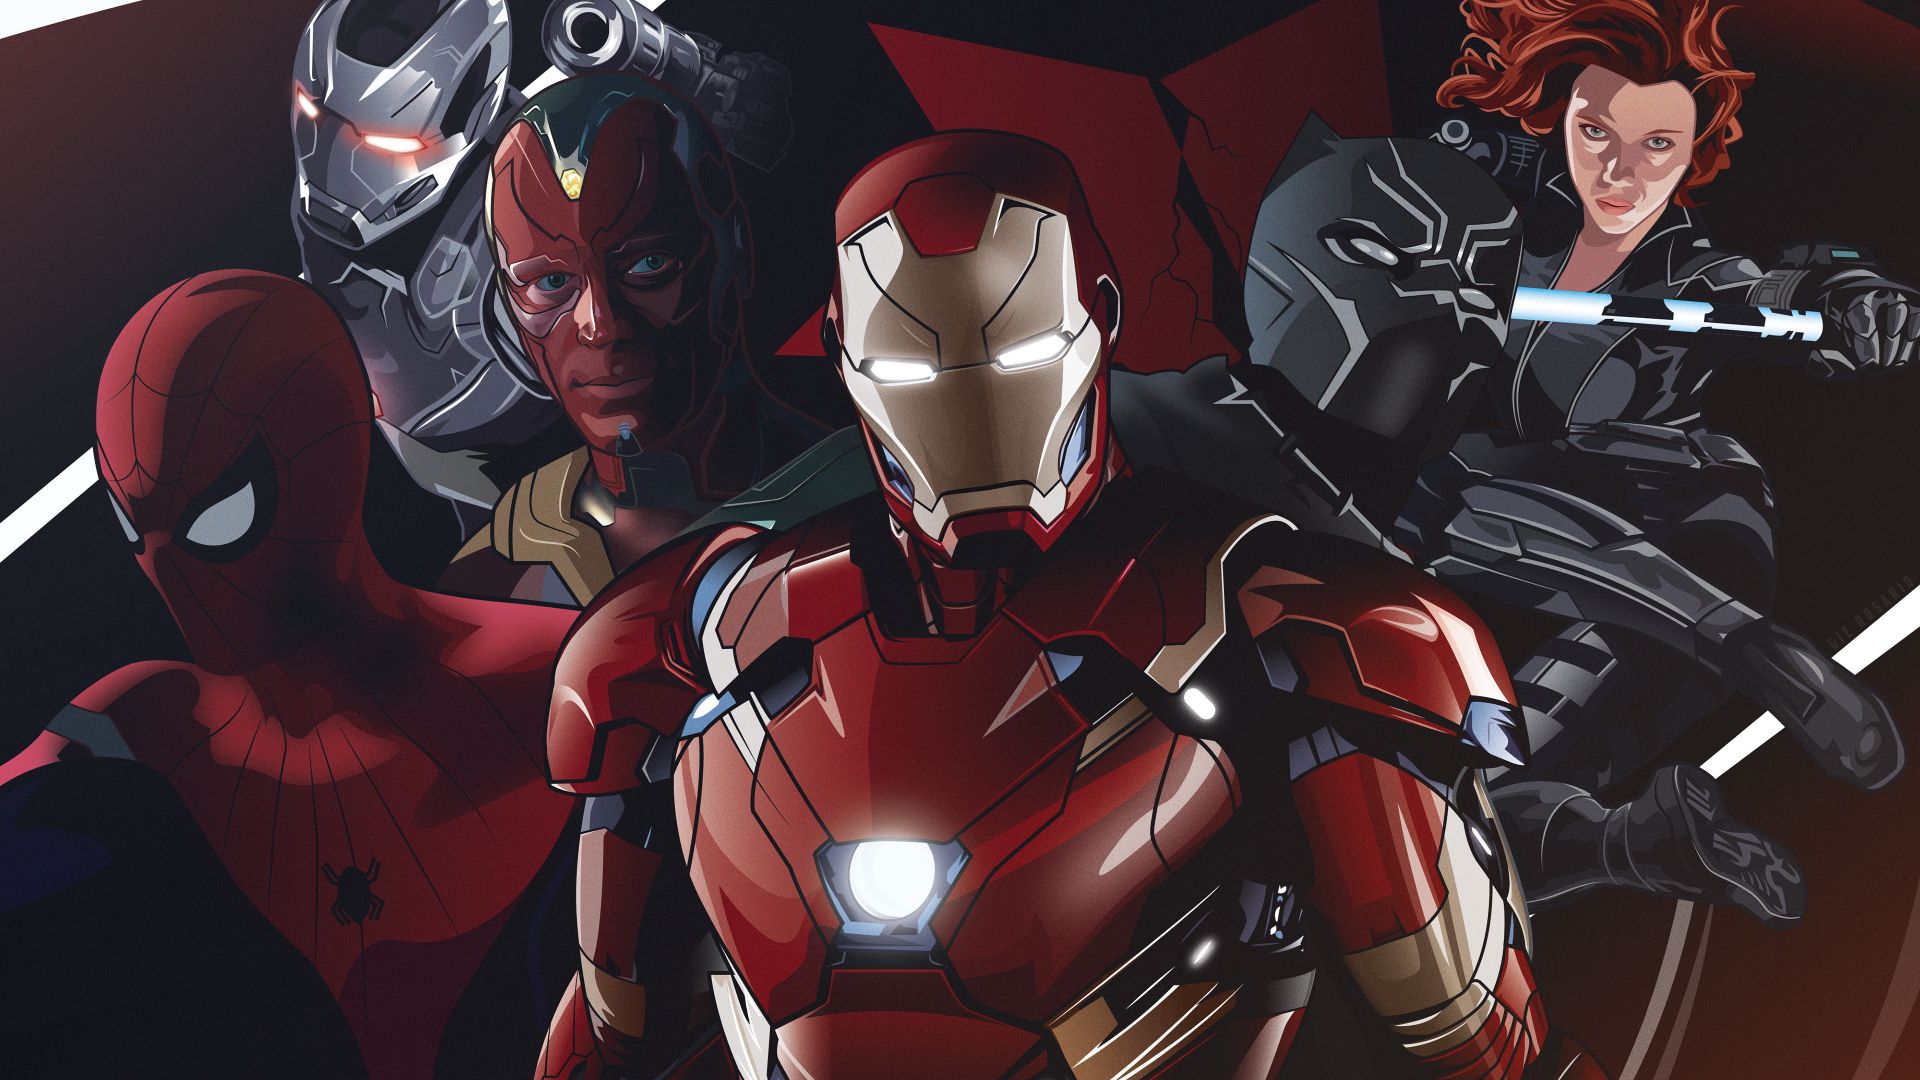 Avengers, marvel superheroes, team, artwork wallpaper, HD image, picture, background, 46a567